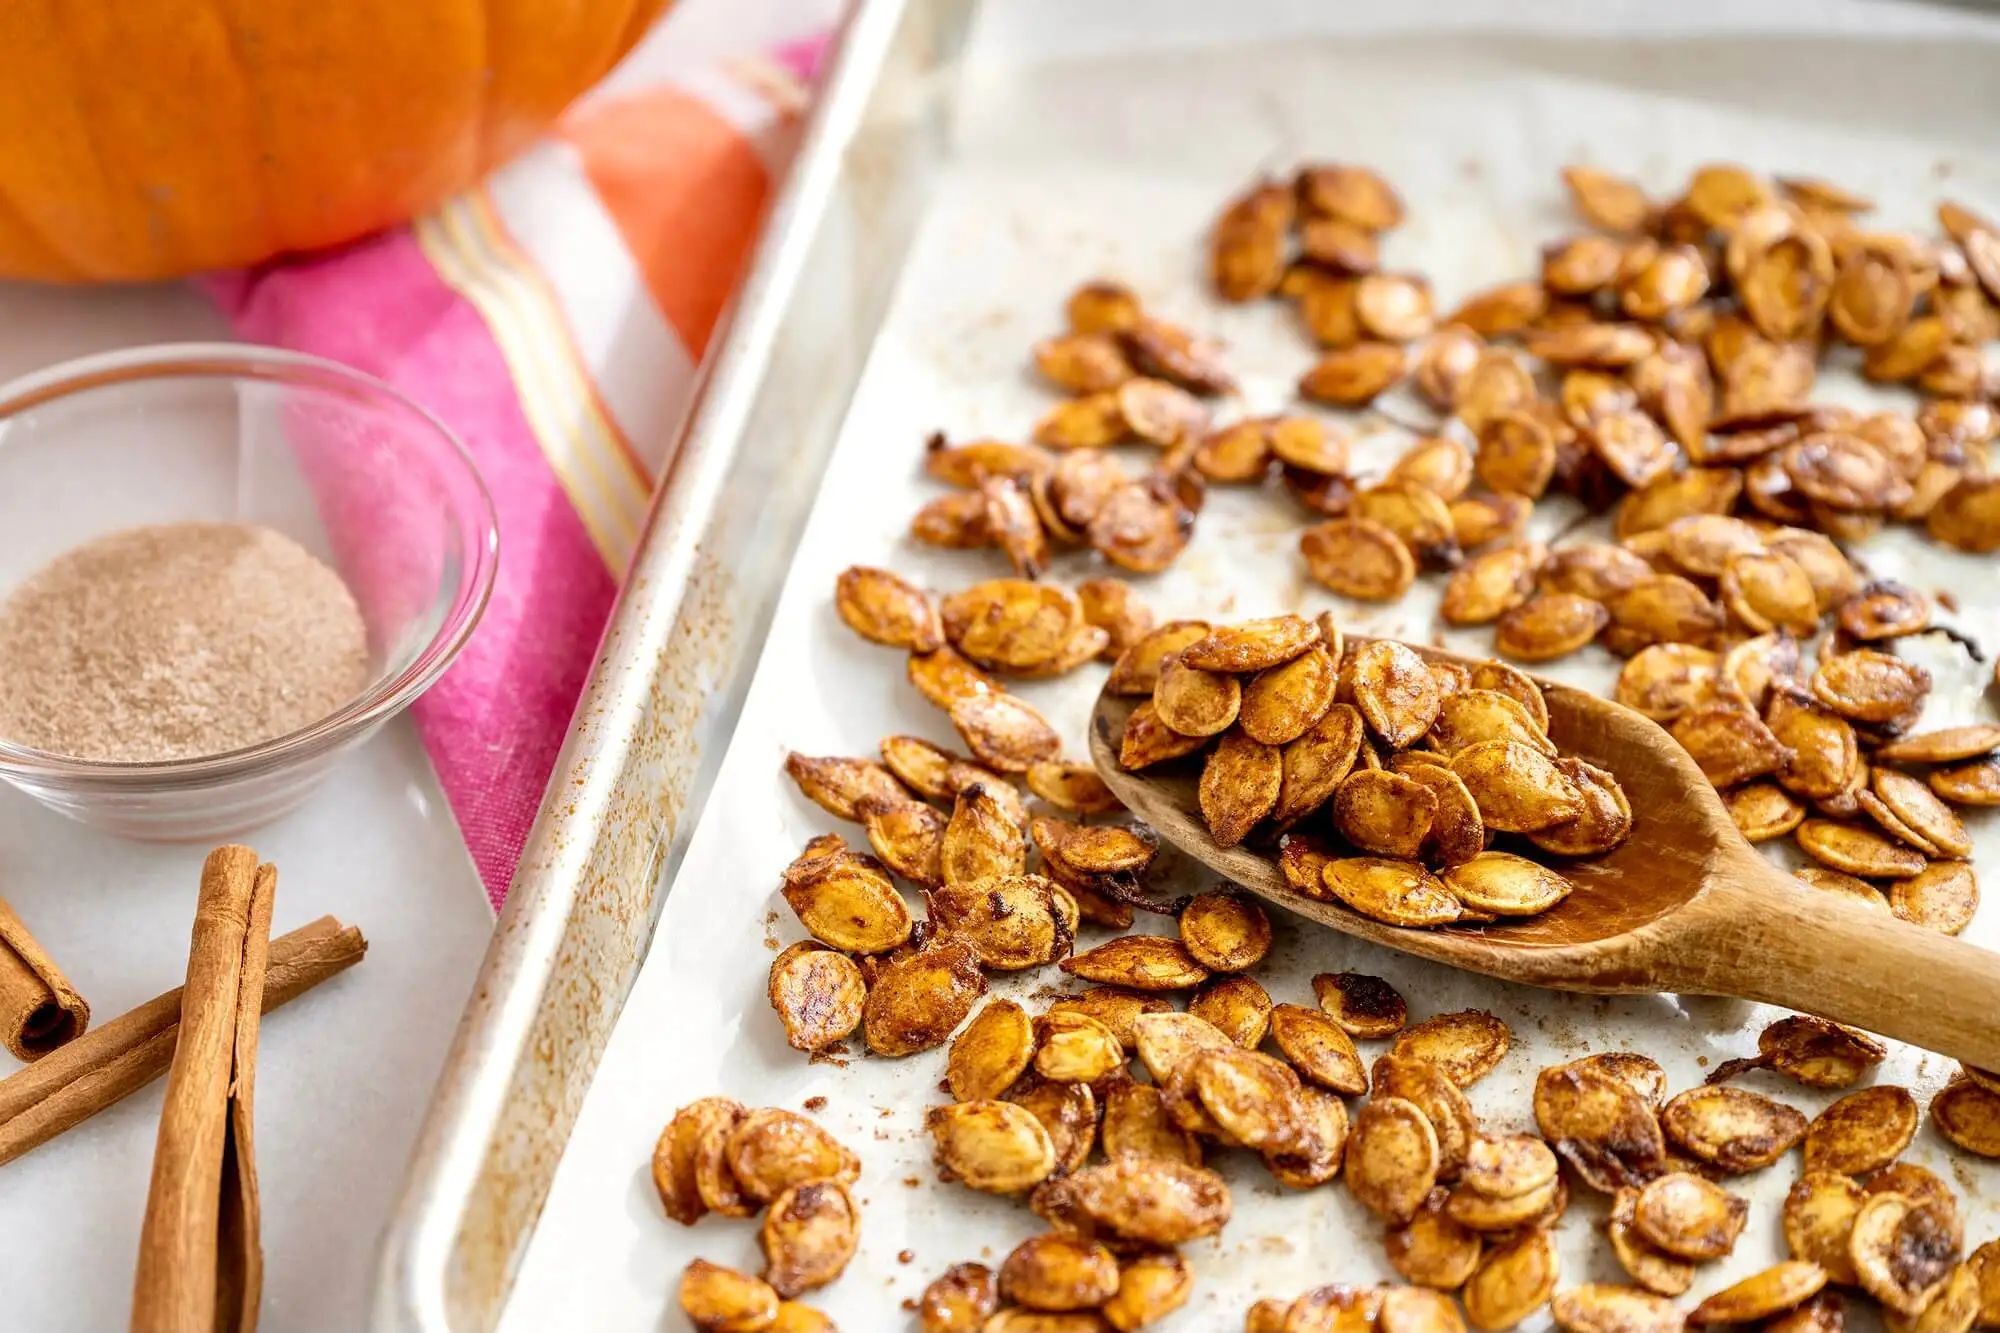 How To Make Cinnamon Pumpkin Seeds